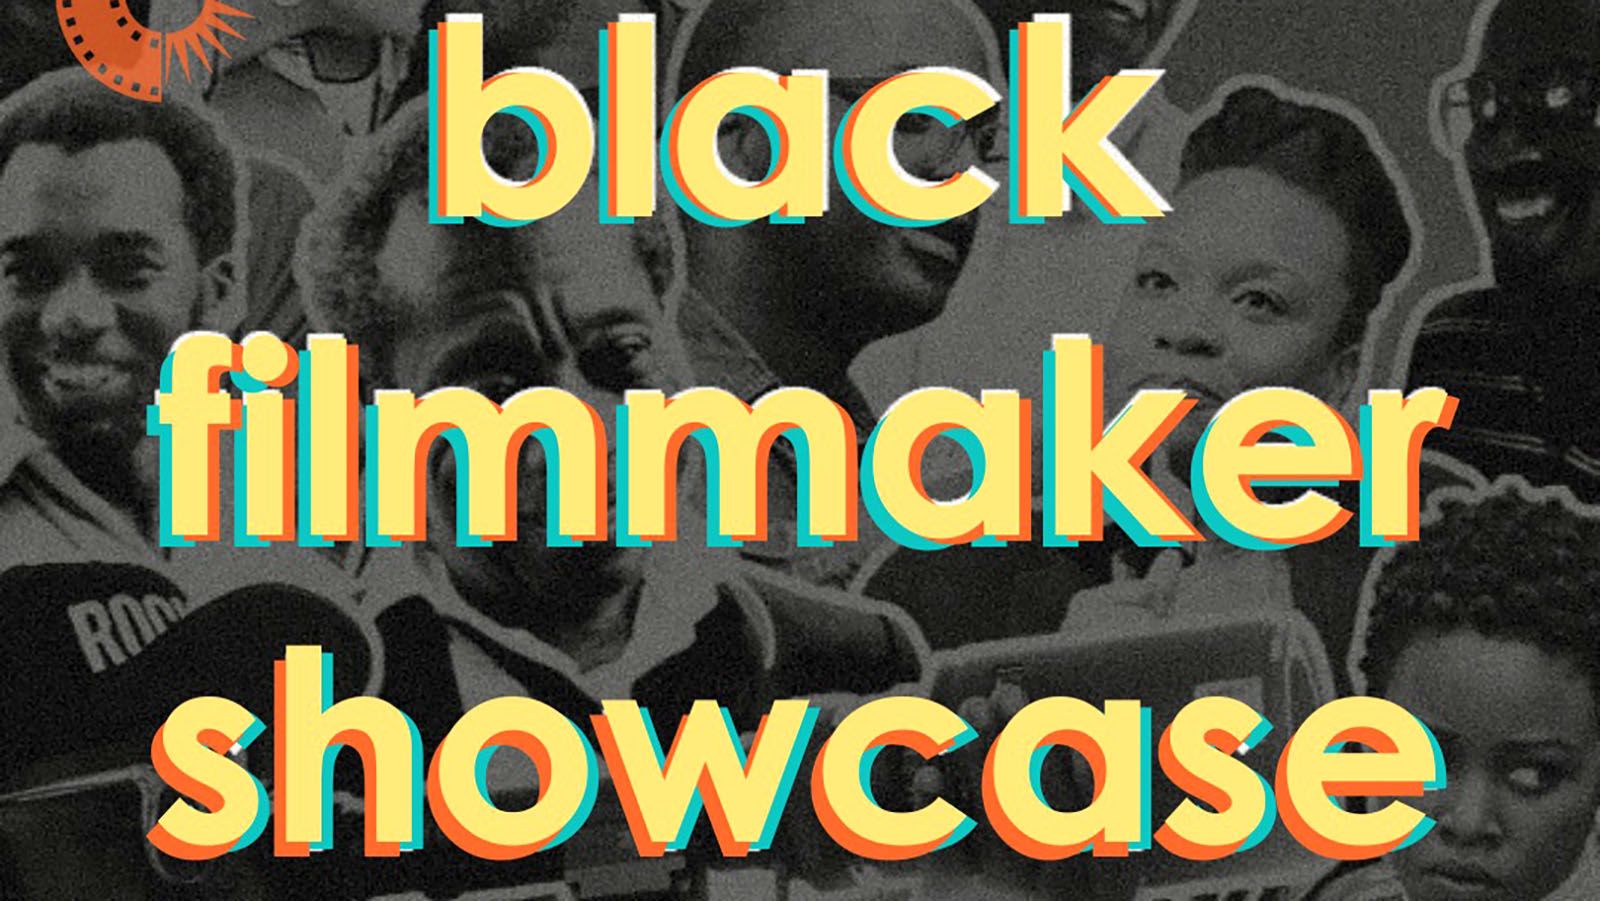 Cinema Center will host a Black Filmmaker Showcase on Friday, Feb. 10.